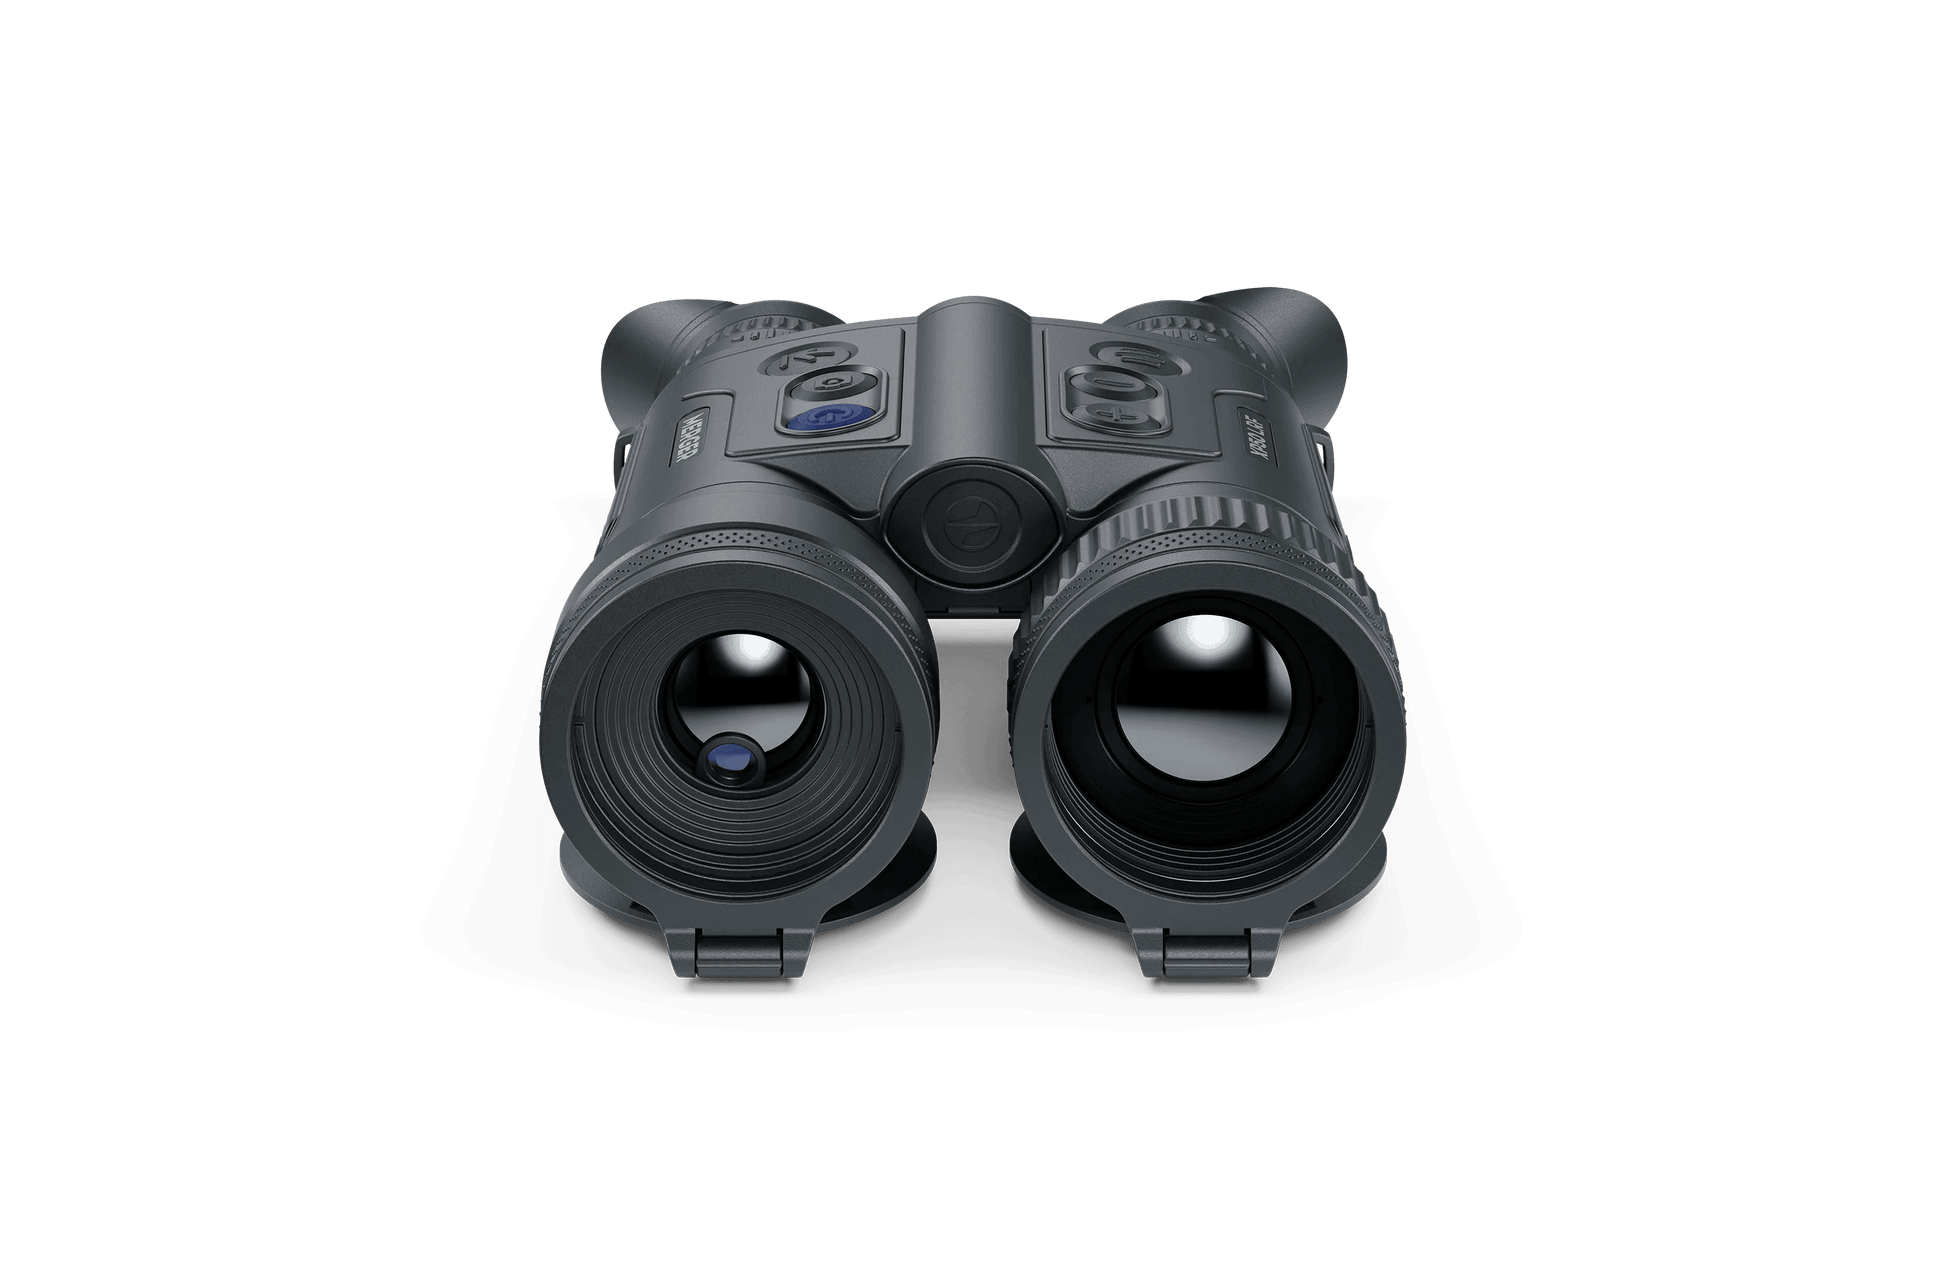 Pulsar Merger LRF XP50 Thermal Binoculars 640 - NVU